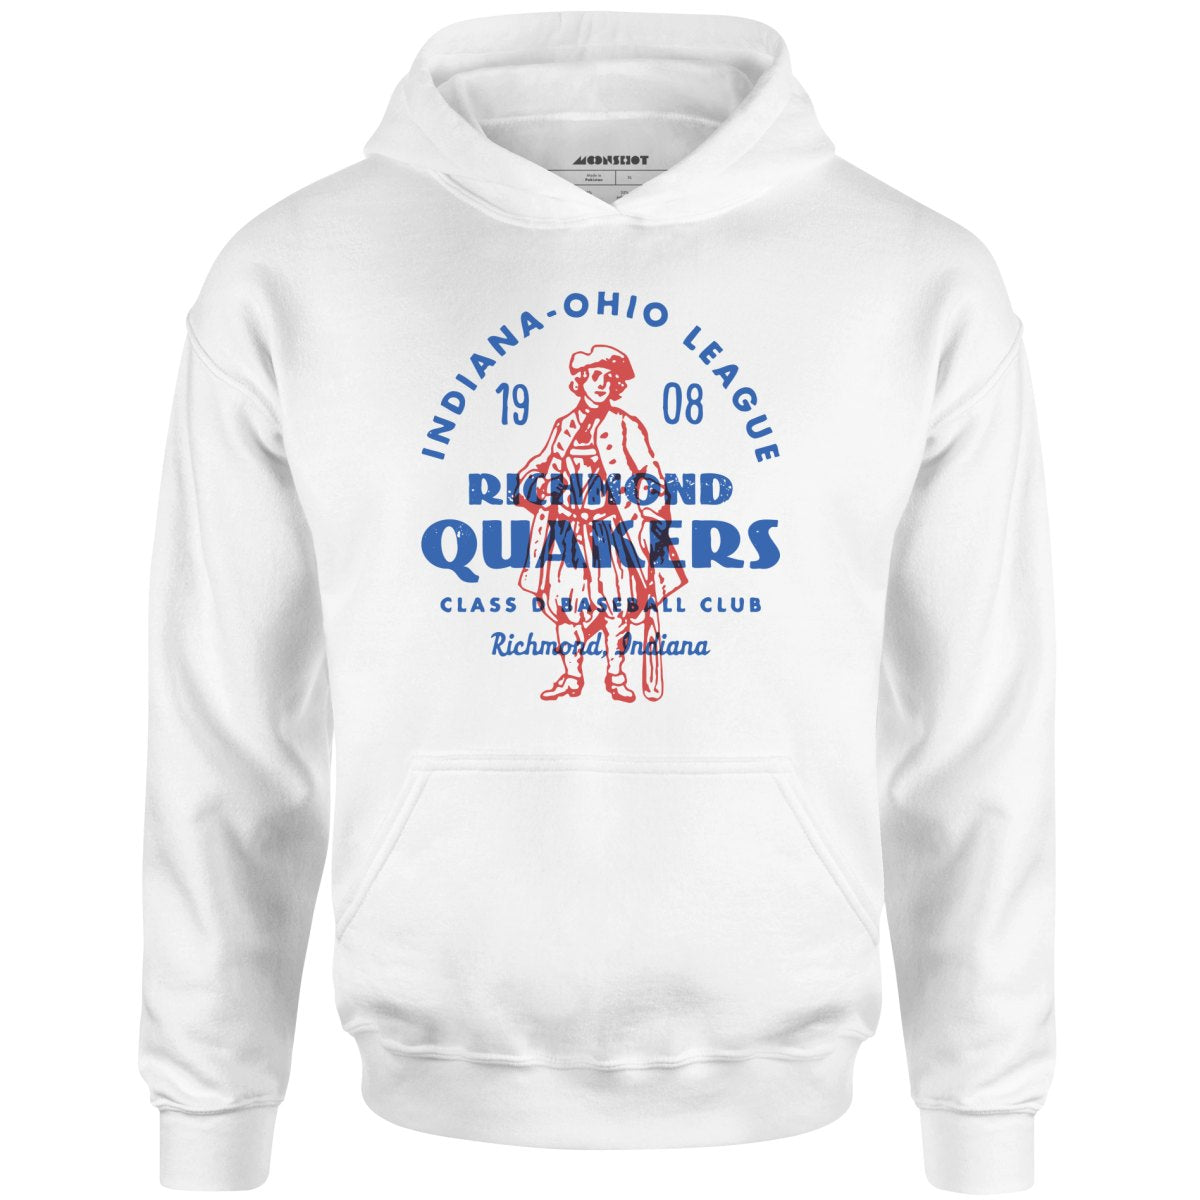 Richmond Quakers - Indiana - Vintage Defunct Baseball Teams - Unisex Hoodie